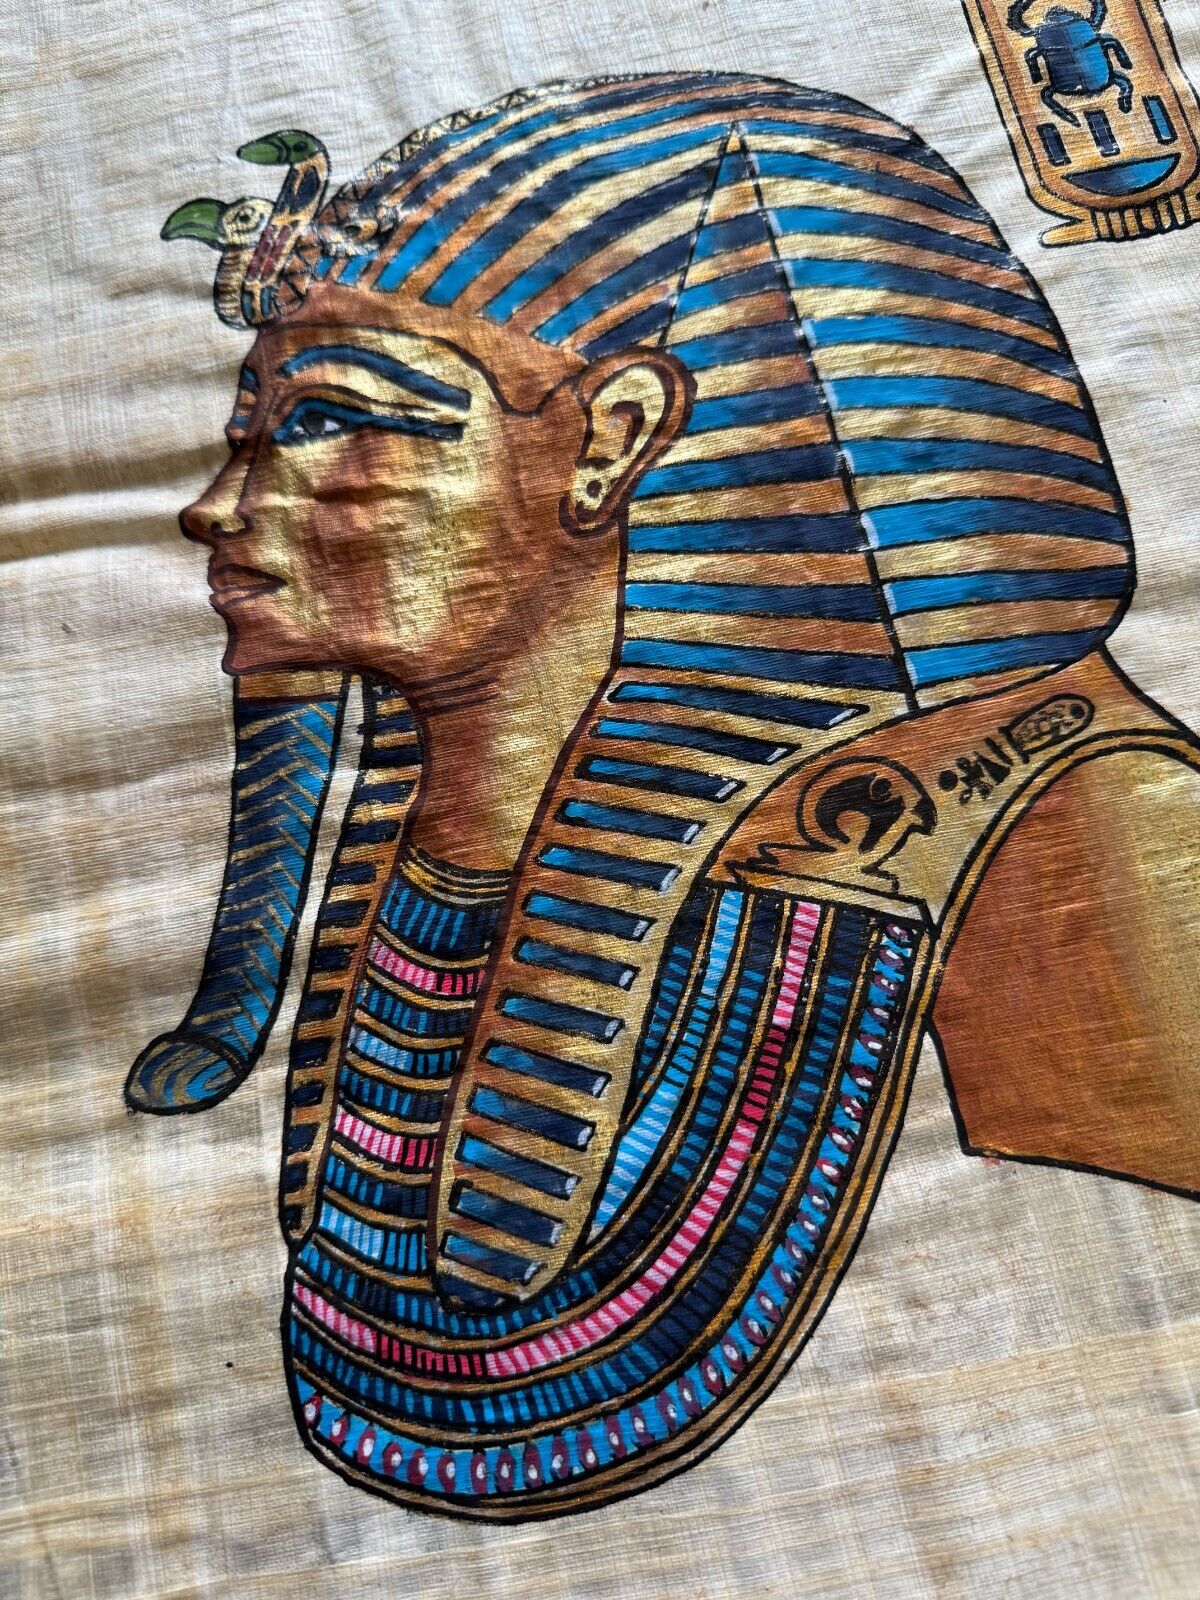 TUTANKHAMUN KING PHAROH PAPYRUS 1960’s EGYPTIAN CRAFT ART 17x13 INCHES COA # 4